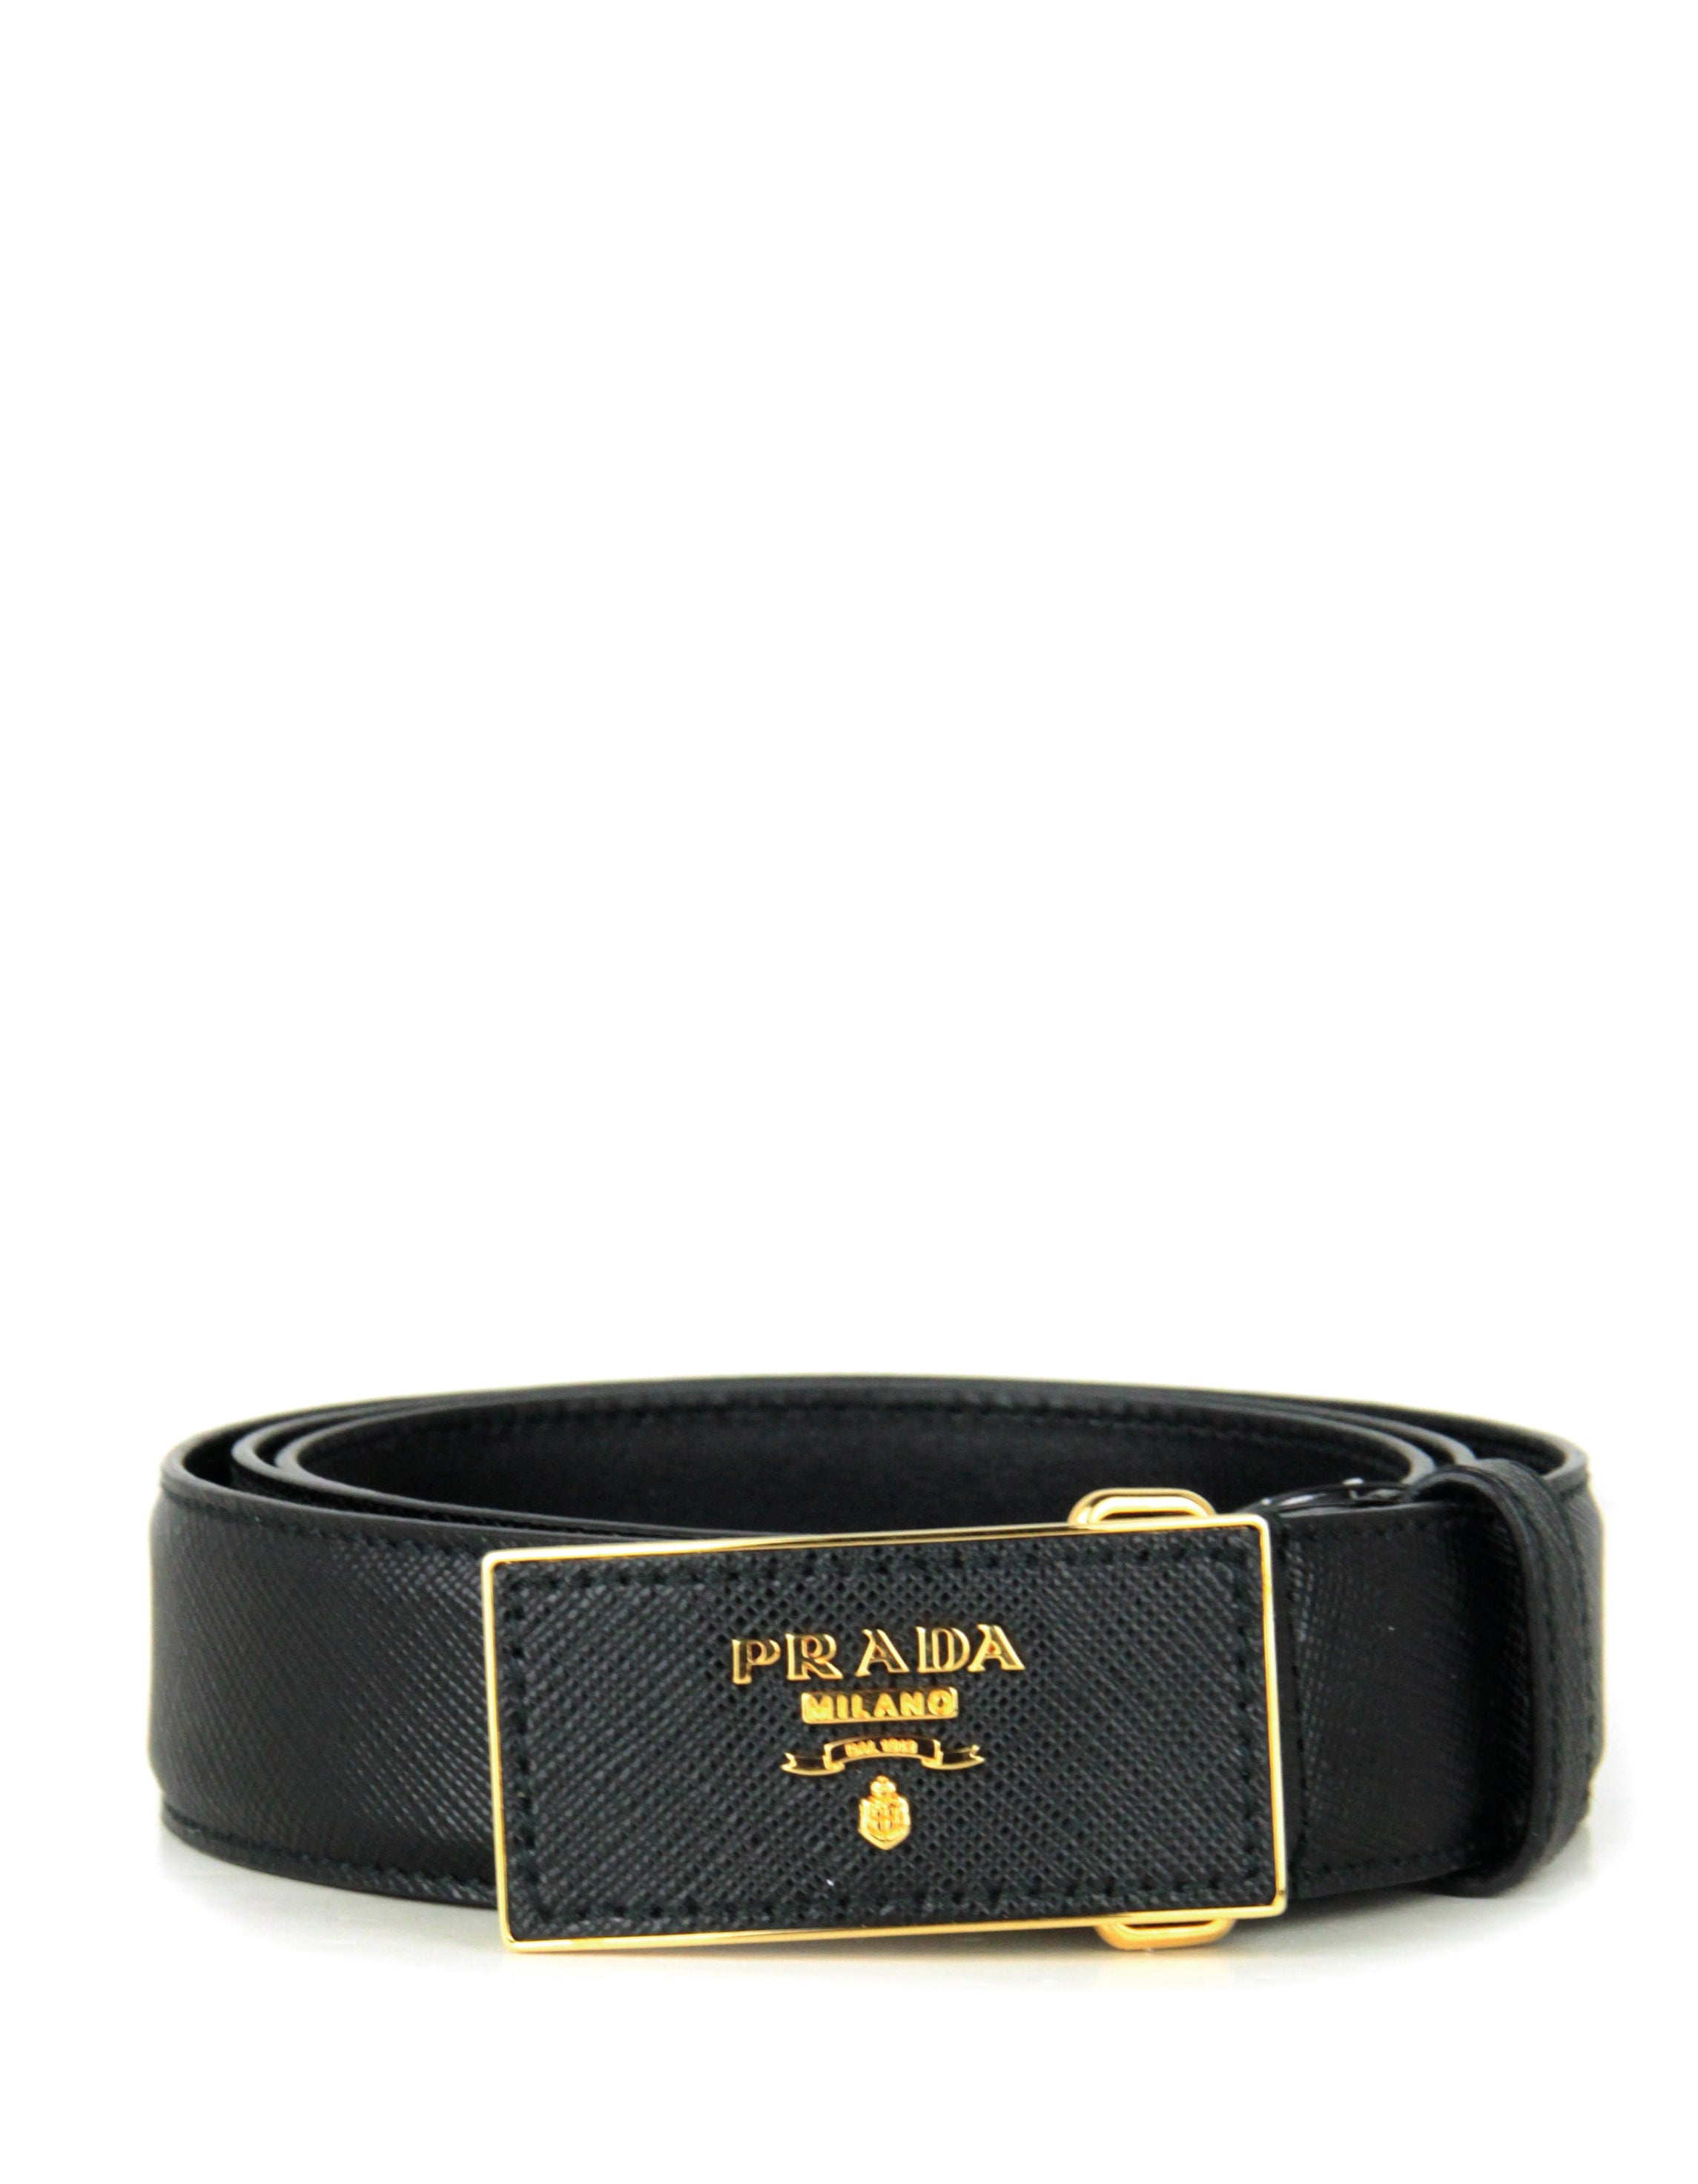 Prada Black/ Gold Saffiano Leather Belt sz 85/ 34